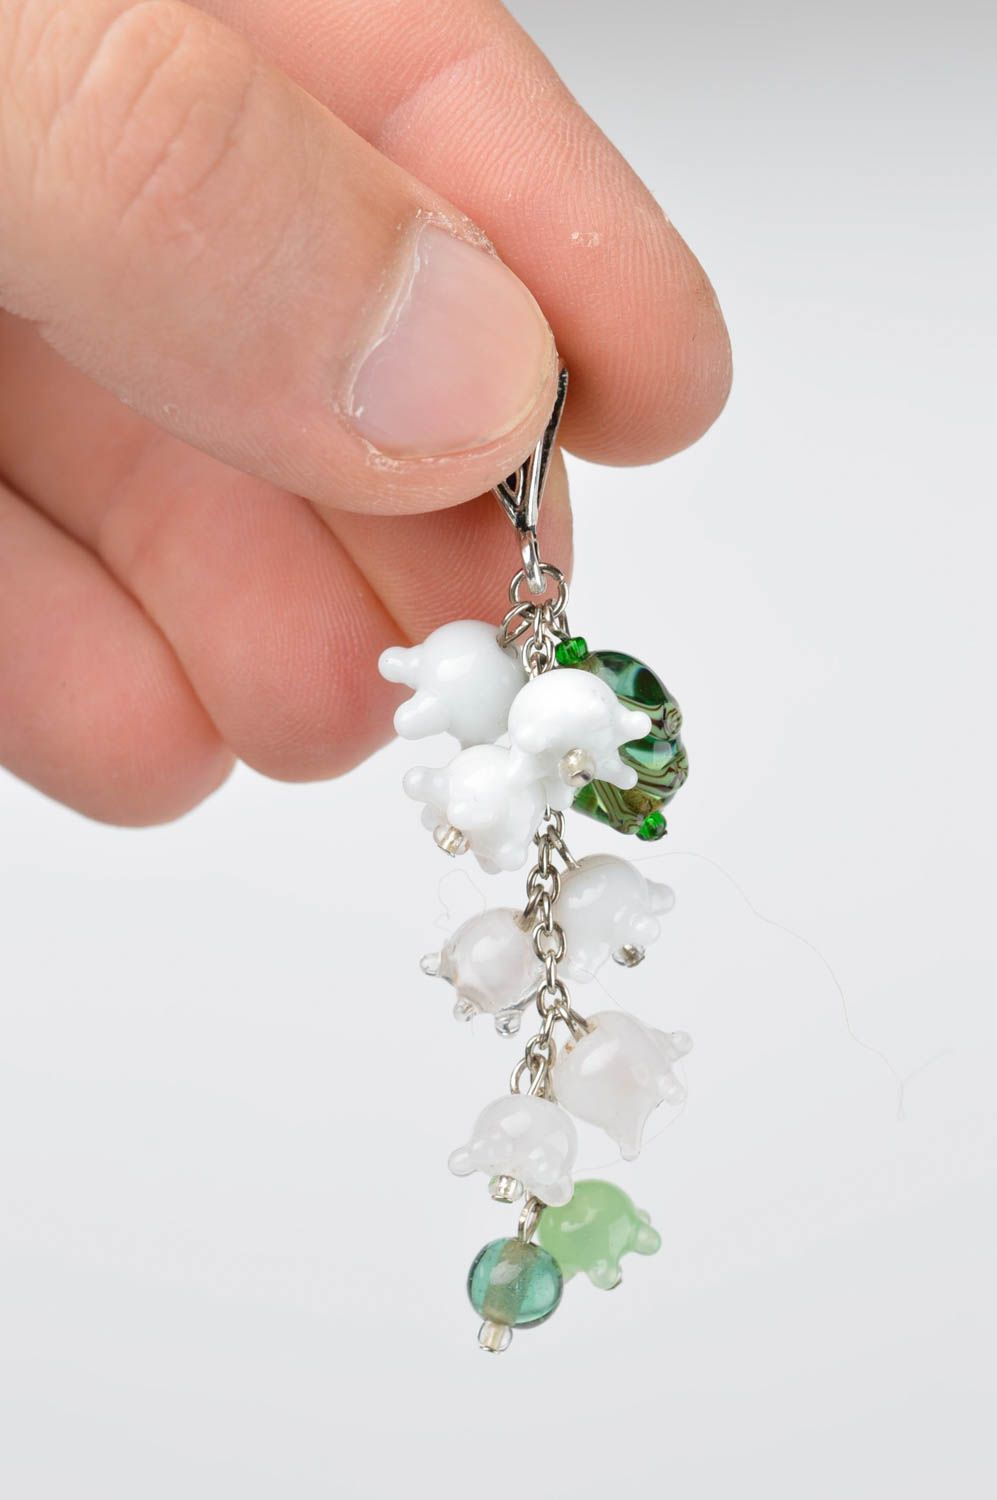 Unusual handmade beaded pendant glass bead pendant designer jewelry gift ideas photo 3